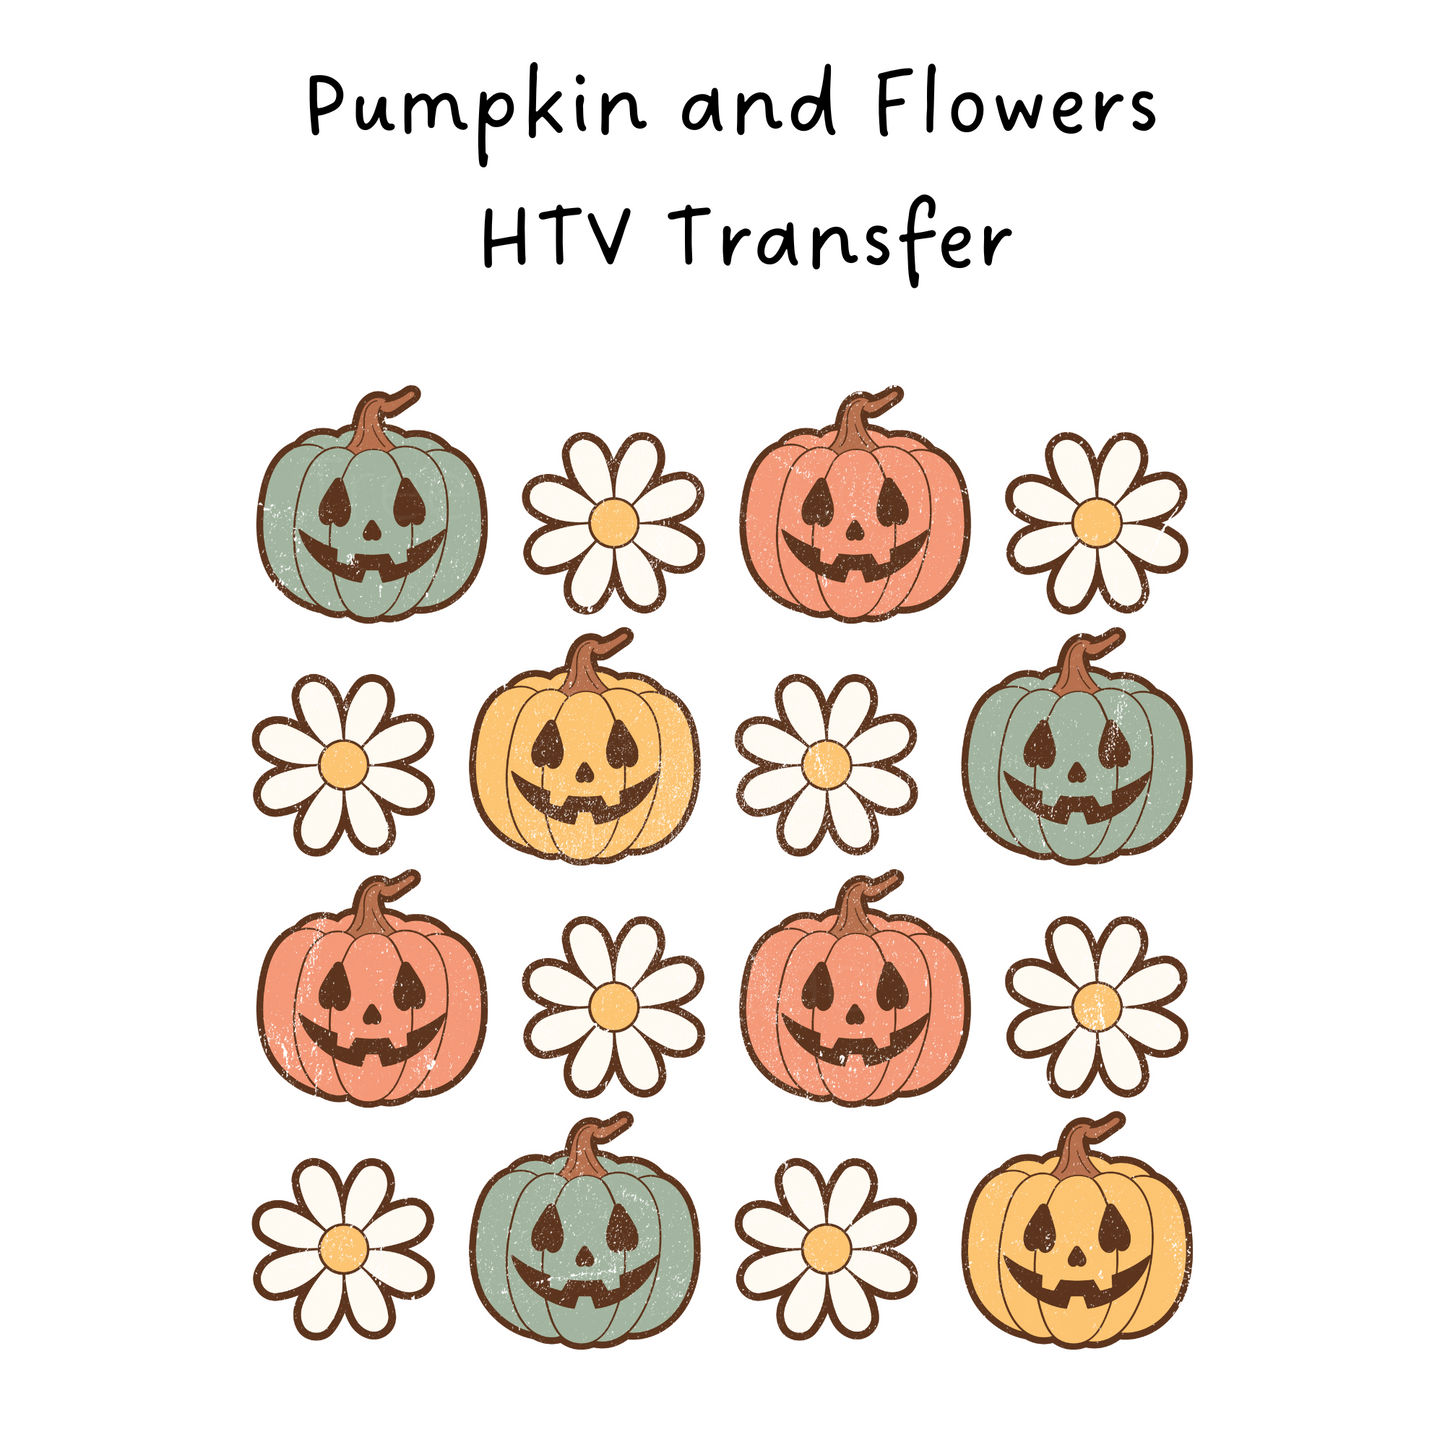 Pumpkins and Flowers HTV Transfer